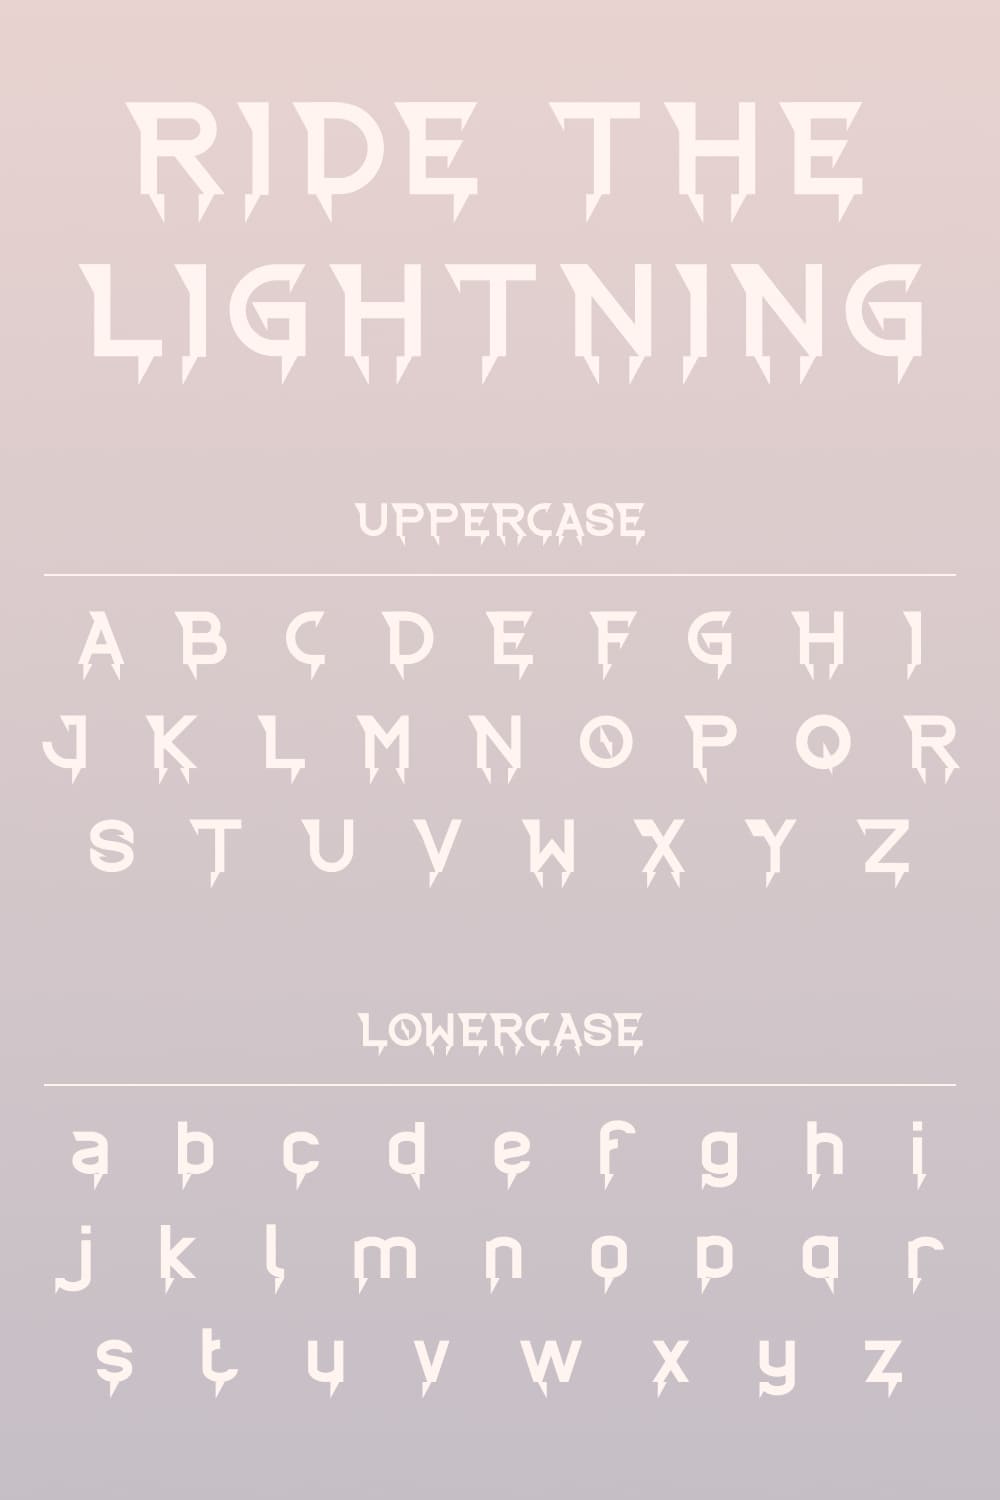 Free lightning font - Pinterest.